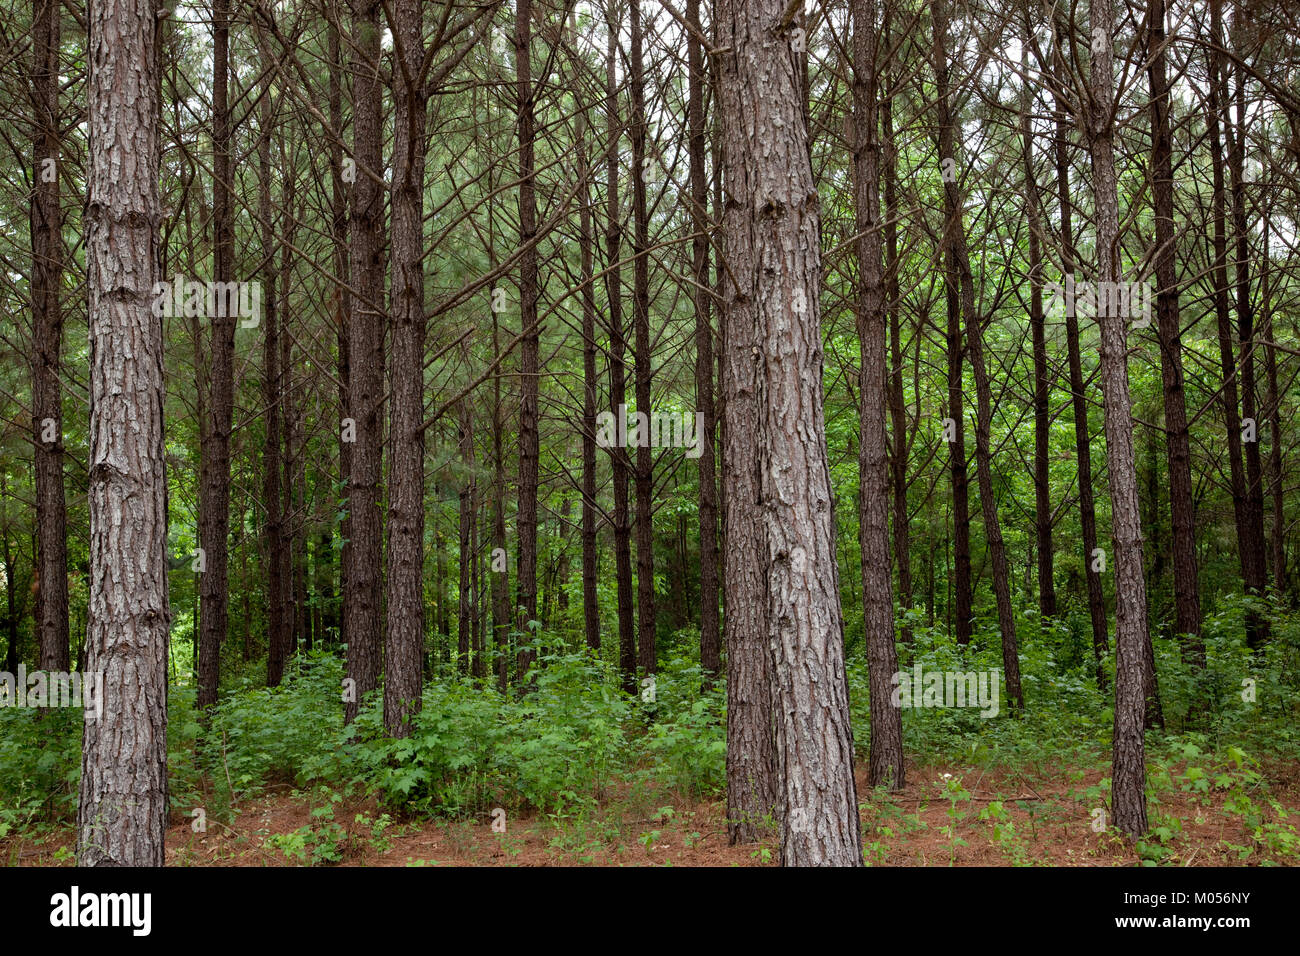 Pine trees in rural Alabama Stock Photo